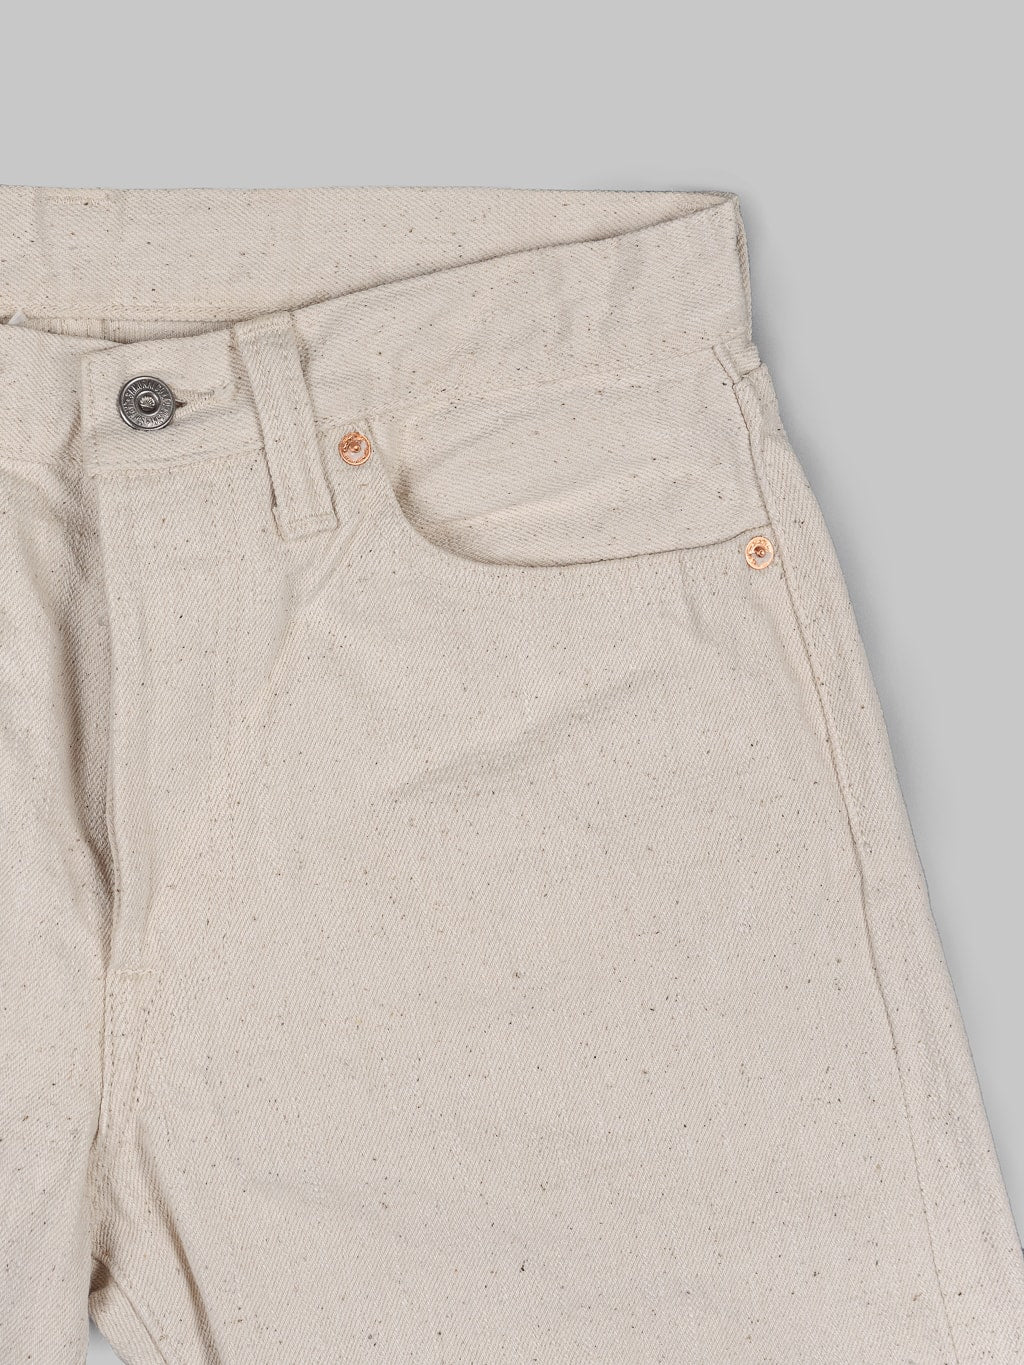 Samurai Jeans Japanese Cotton Ecru Jeans slim straight coin pocket